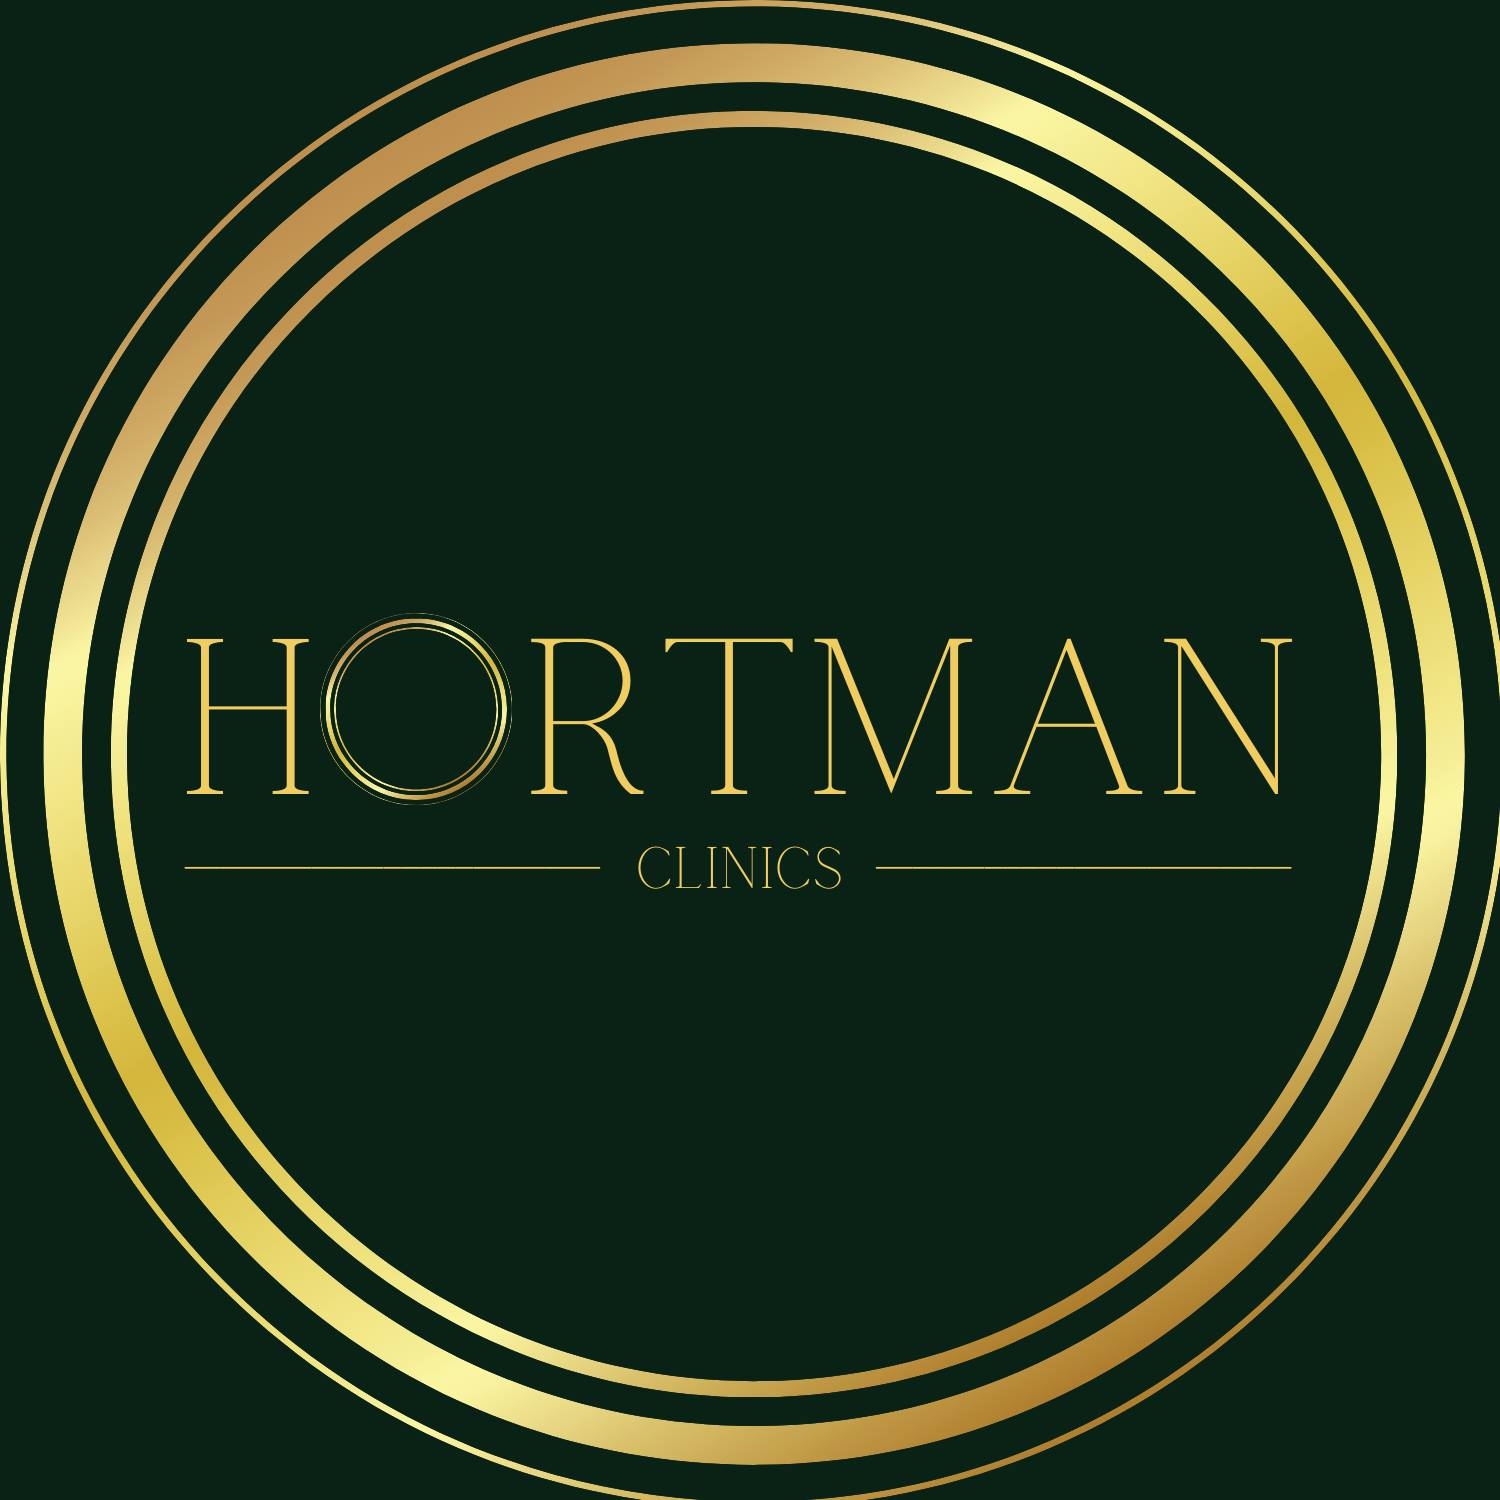 Hortman Clinics - Premium Wellness & Aesthetic Clinics in Dubai